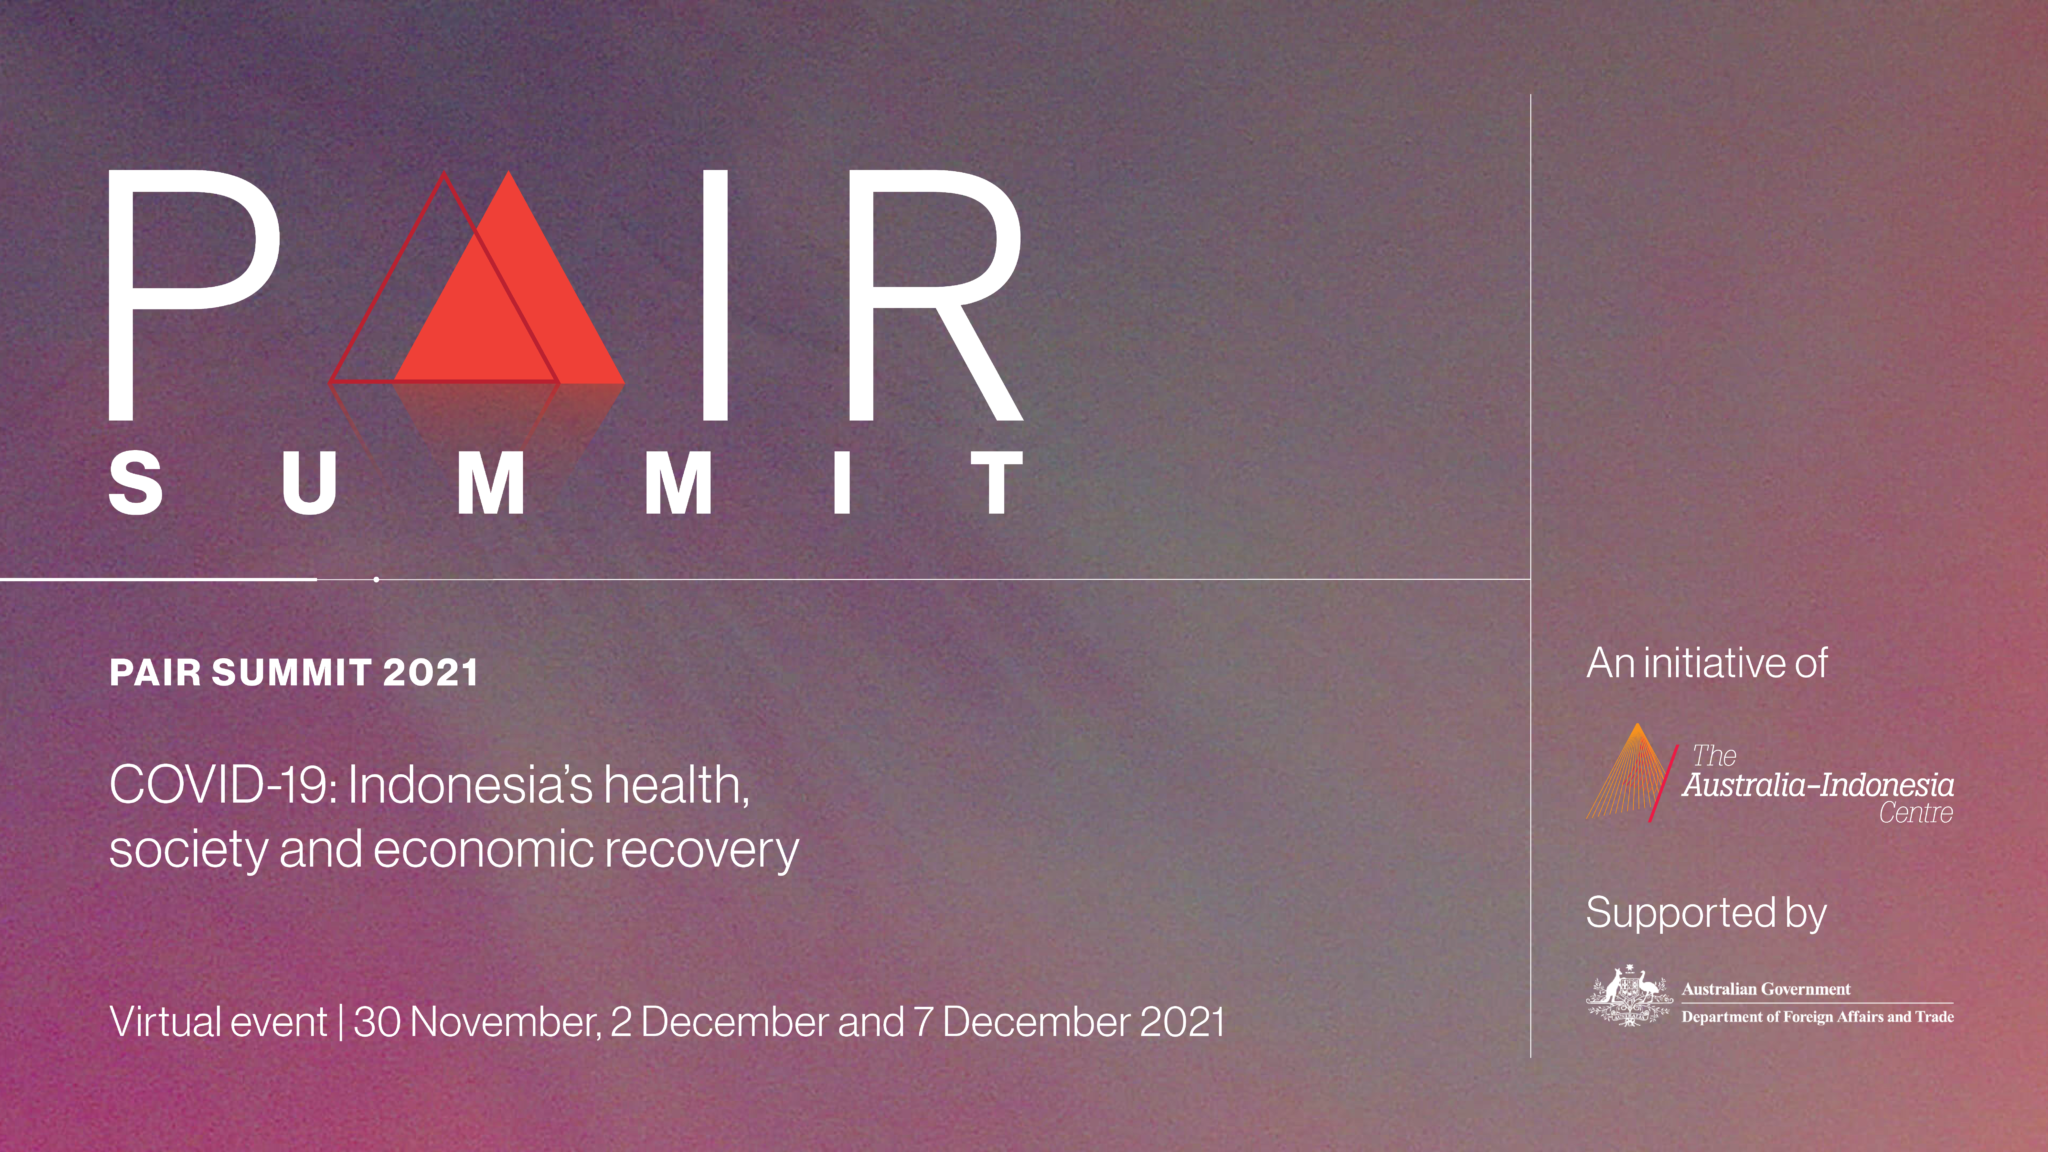 PAIR Annual Summit 2021 – Kemitraan Riset Australia-Indonesia (PAIR)